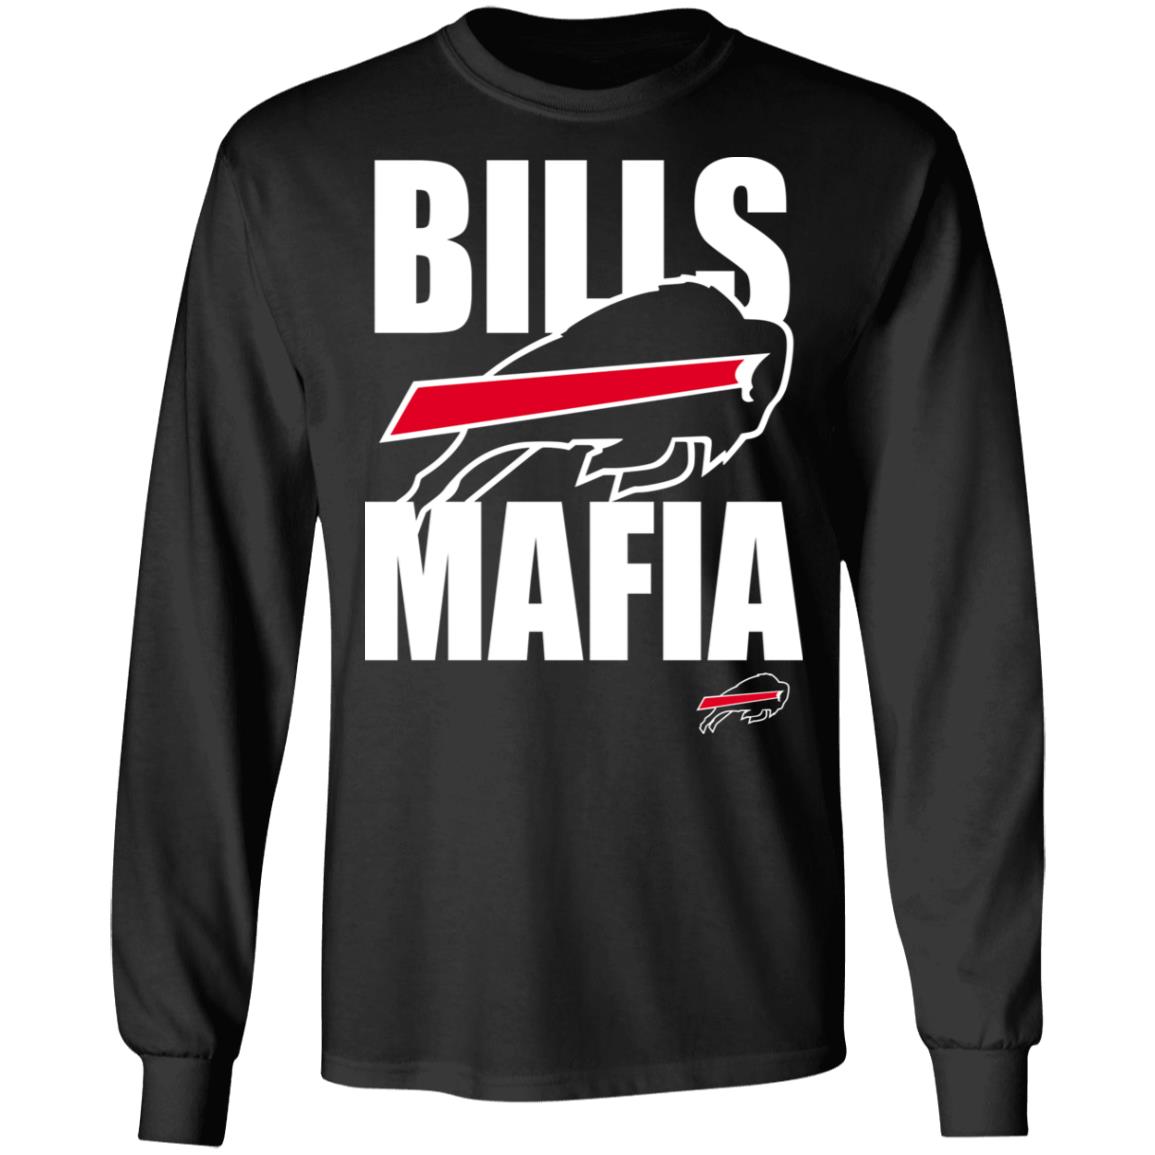 Its a Mafia Thing Royal T-Shirt Sm-5X Nalie Sports Buffalo Football Fans 